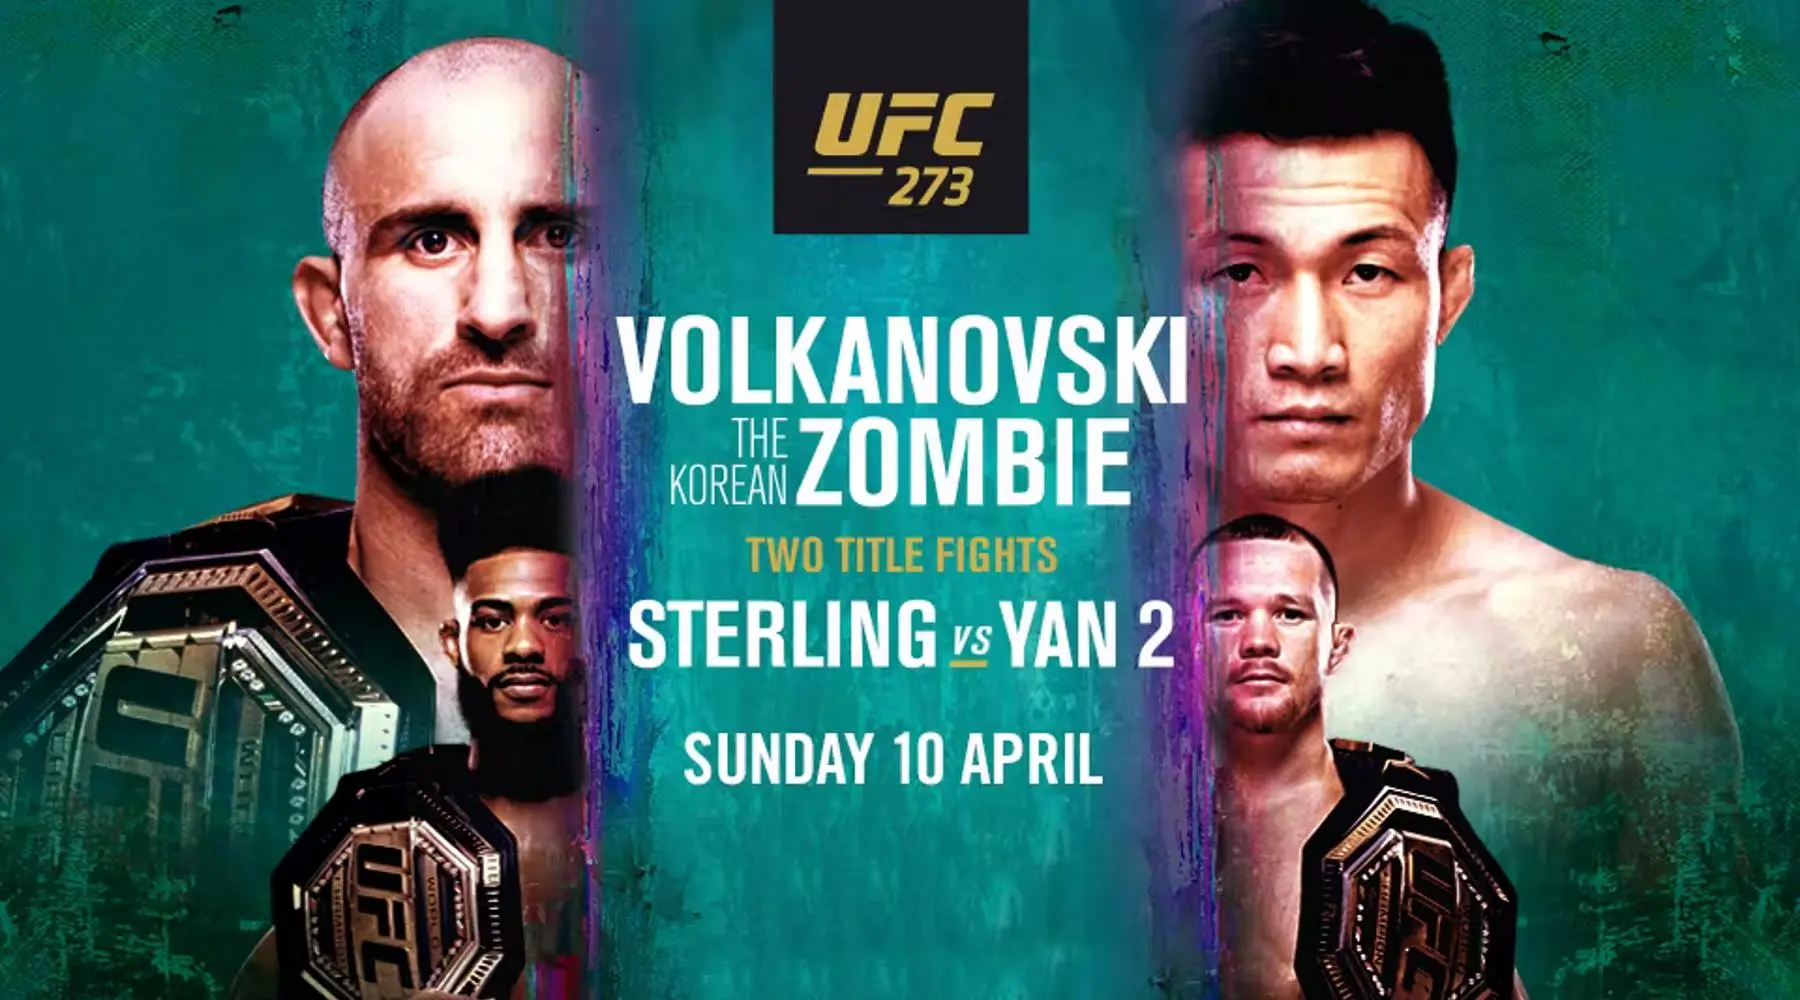 How to watch UFC 273 Volkanovski vs Korean Zombie live in Australia